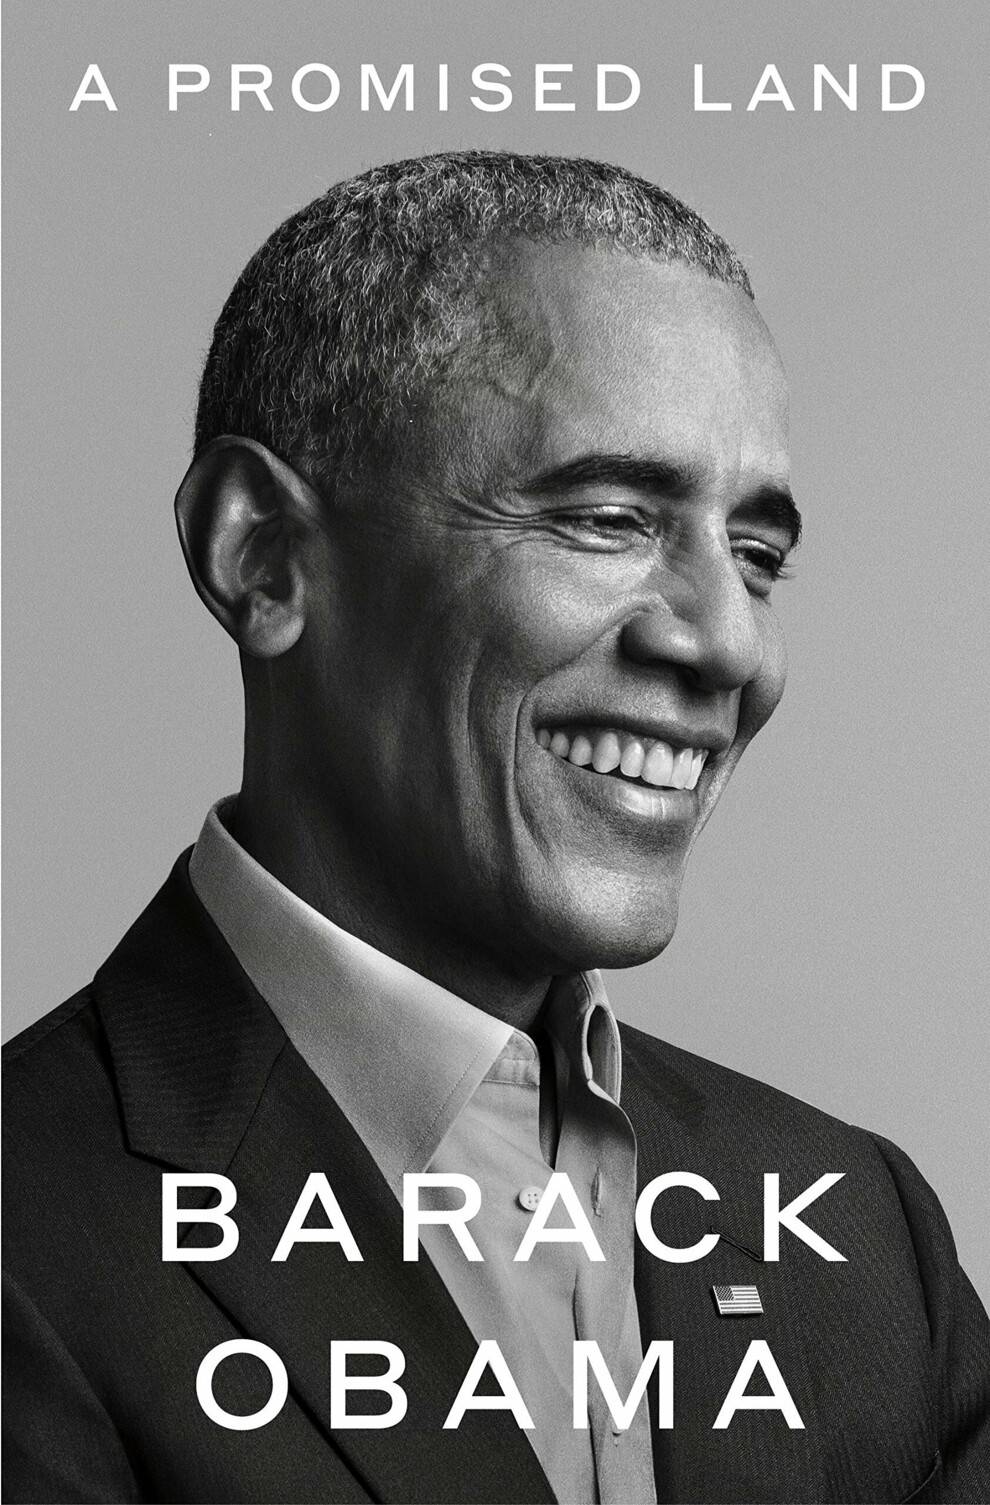 Книга Обами в перший день продажу розійшлася рекордним тиражем — фото